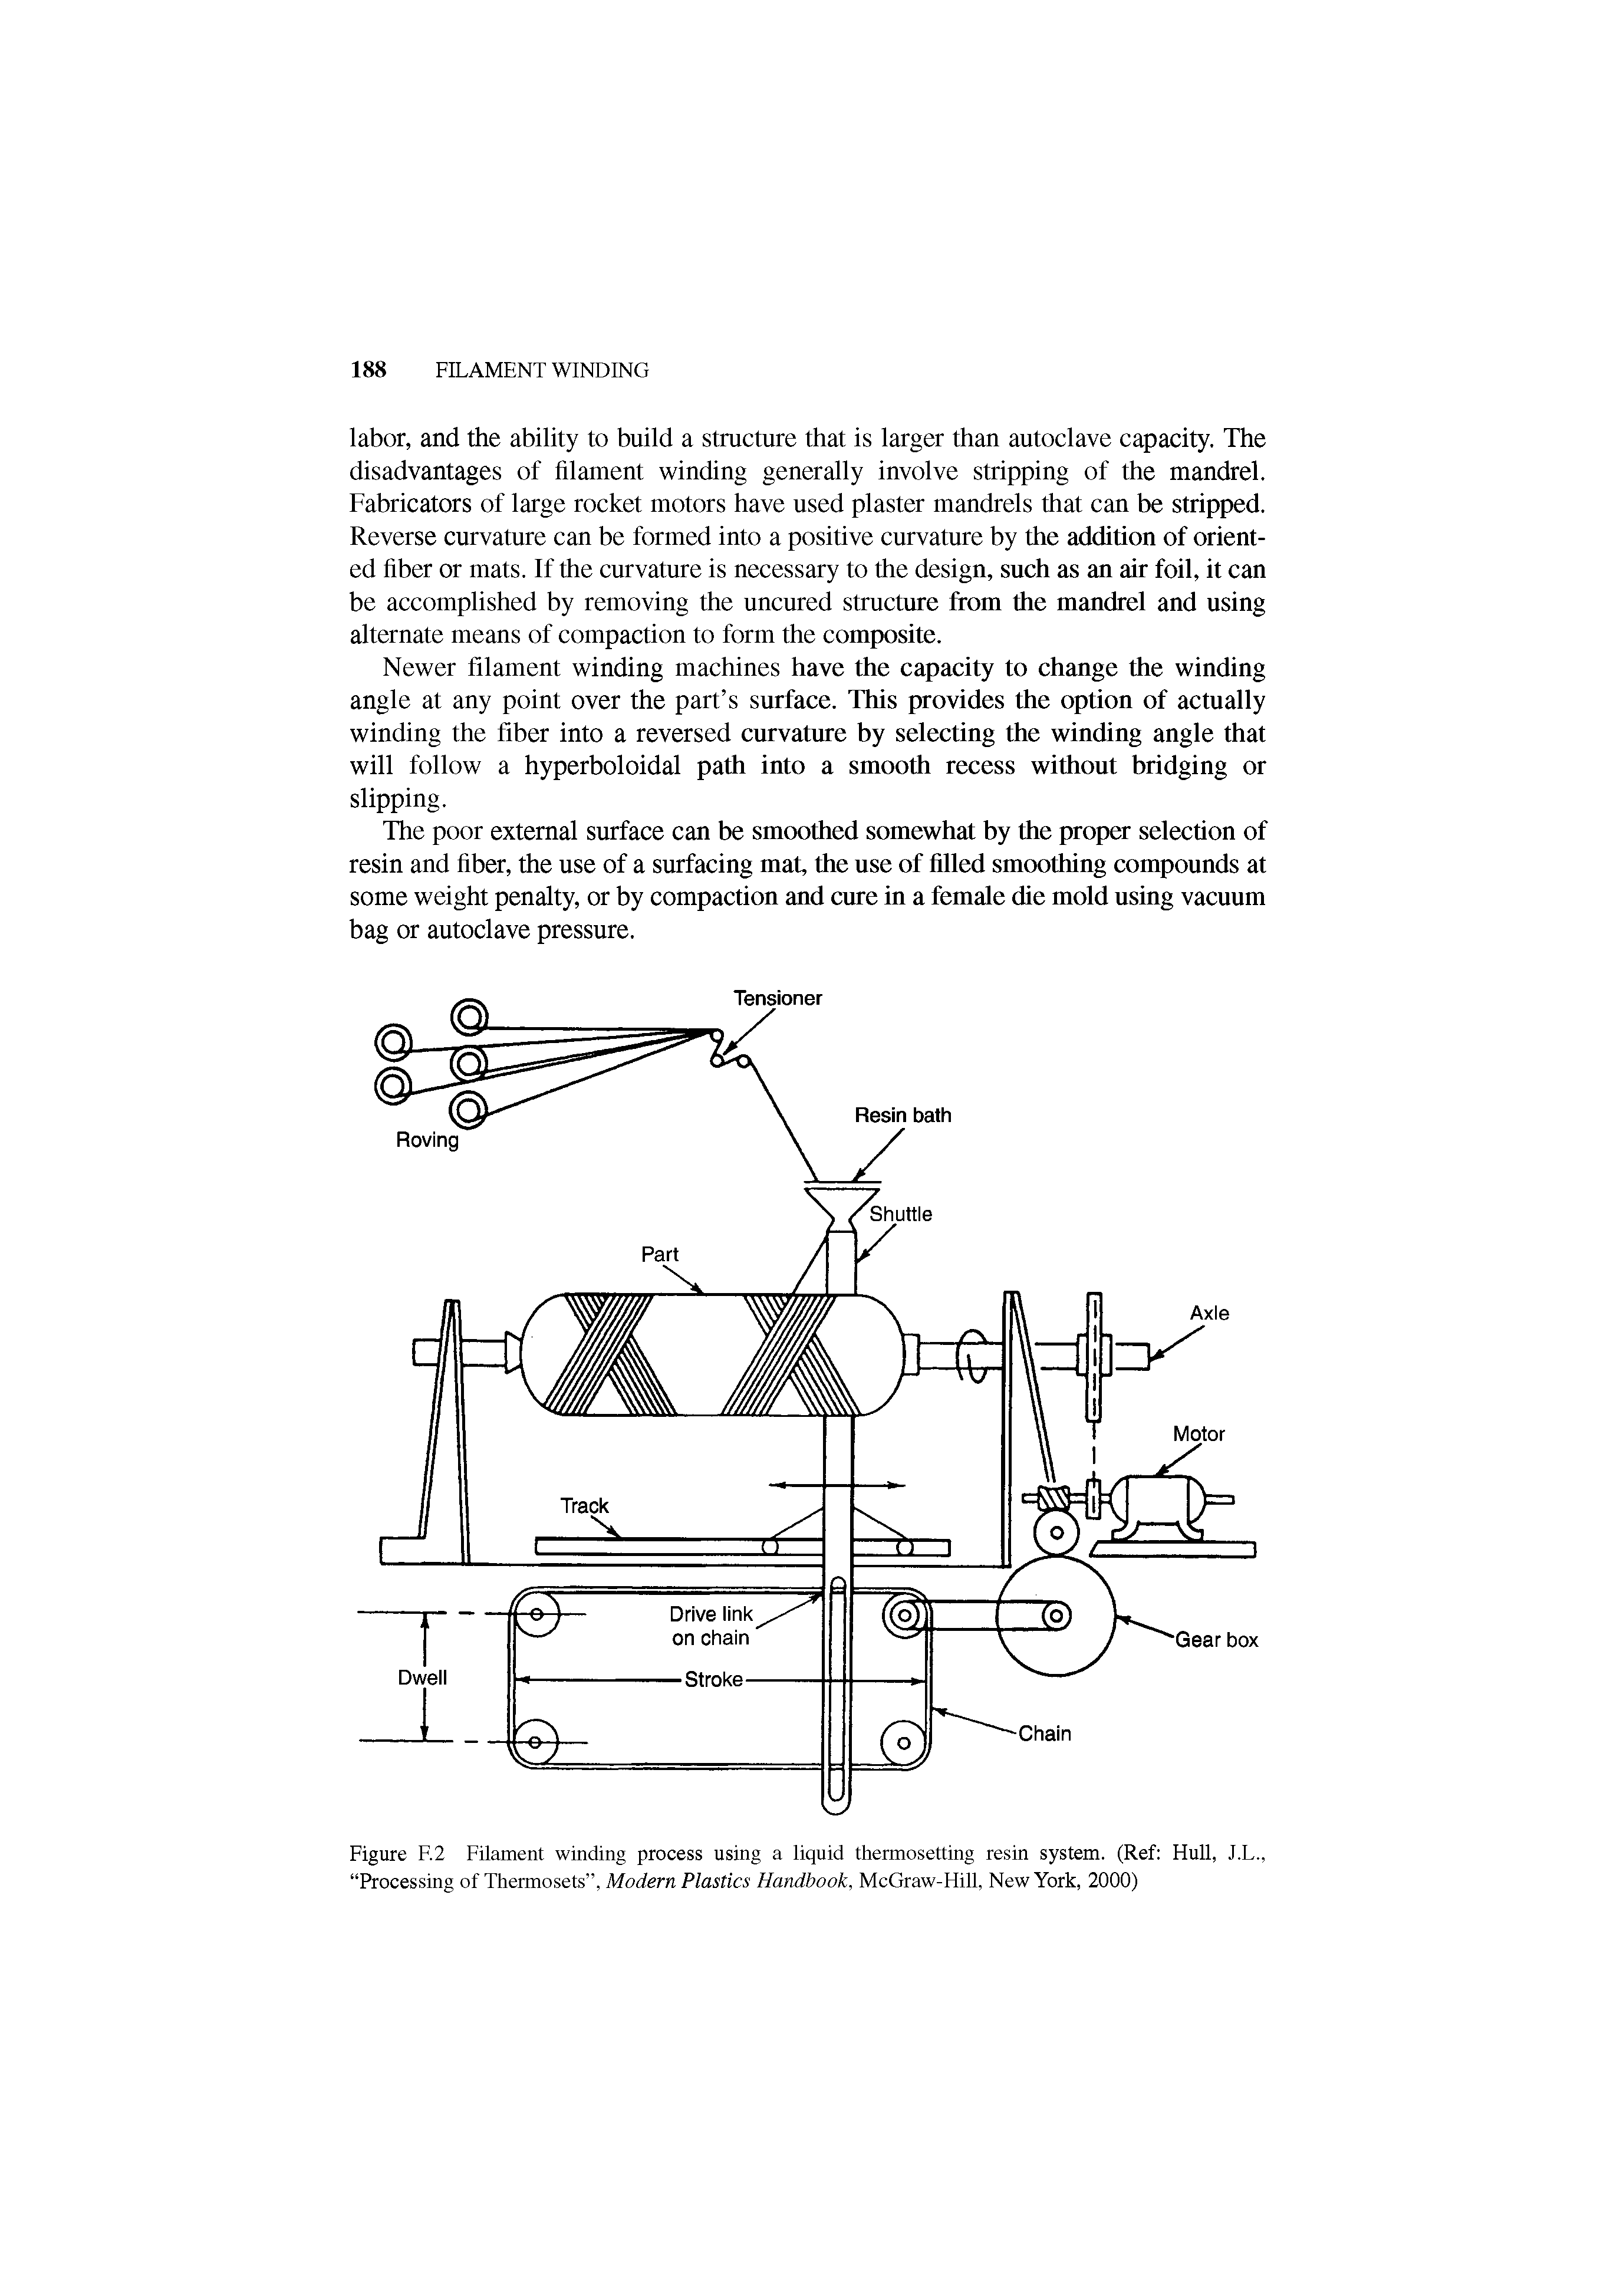 Figure F.2 Filament winding process using a liquid thermosetting resin system. (Ref HuU, J.L., Processing of Thermosets , Modern Plastics Handbook, McGraw-HiU, New York, 2000)...